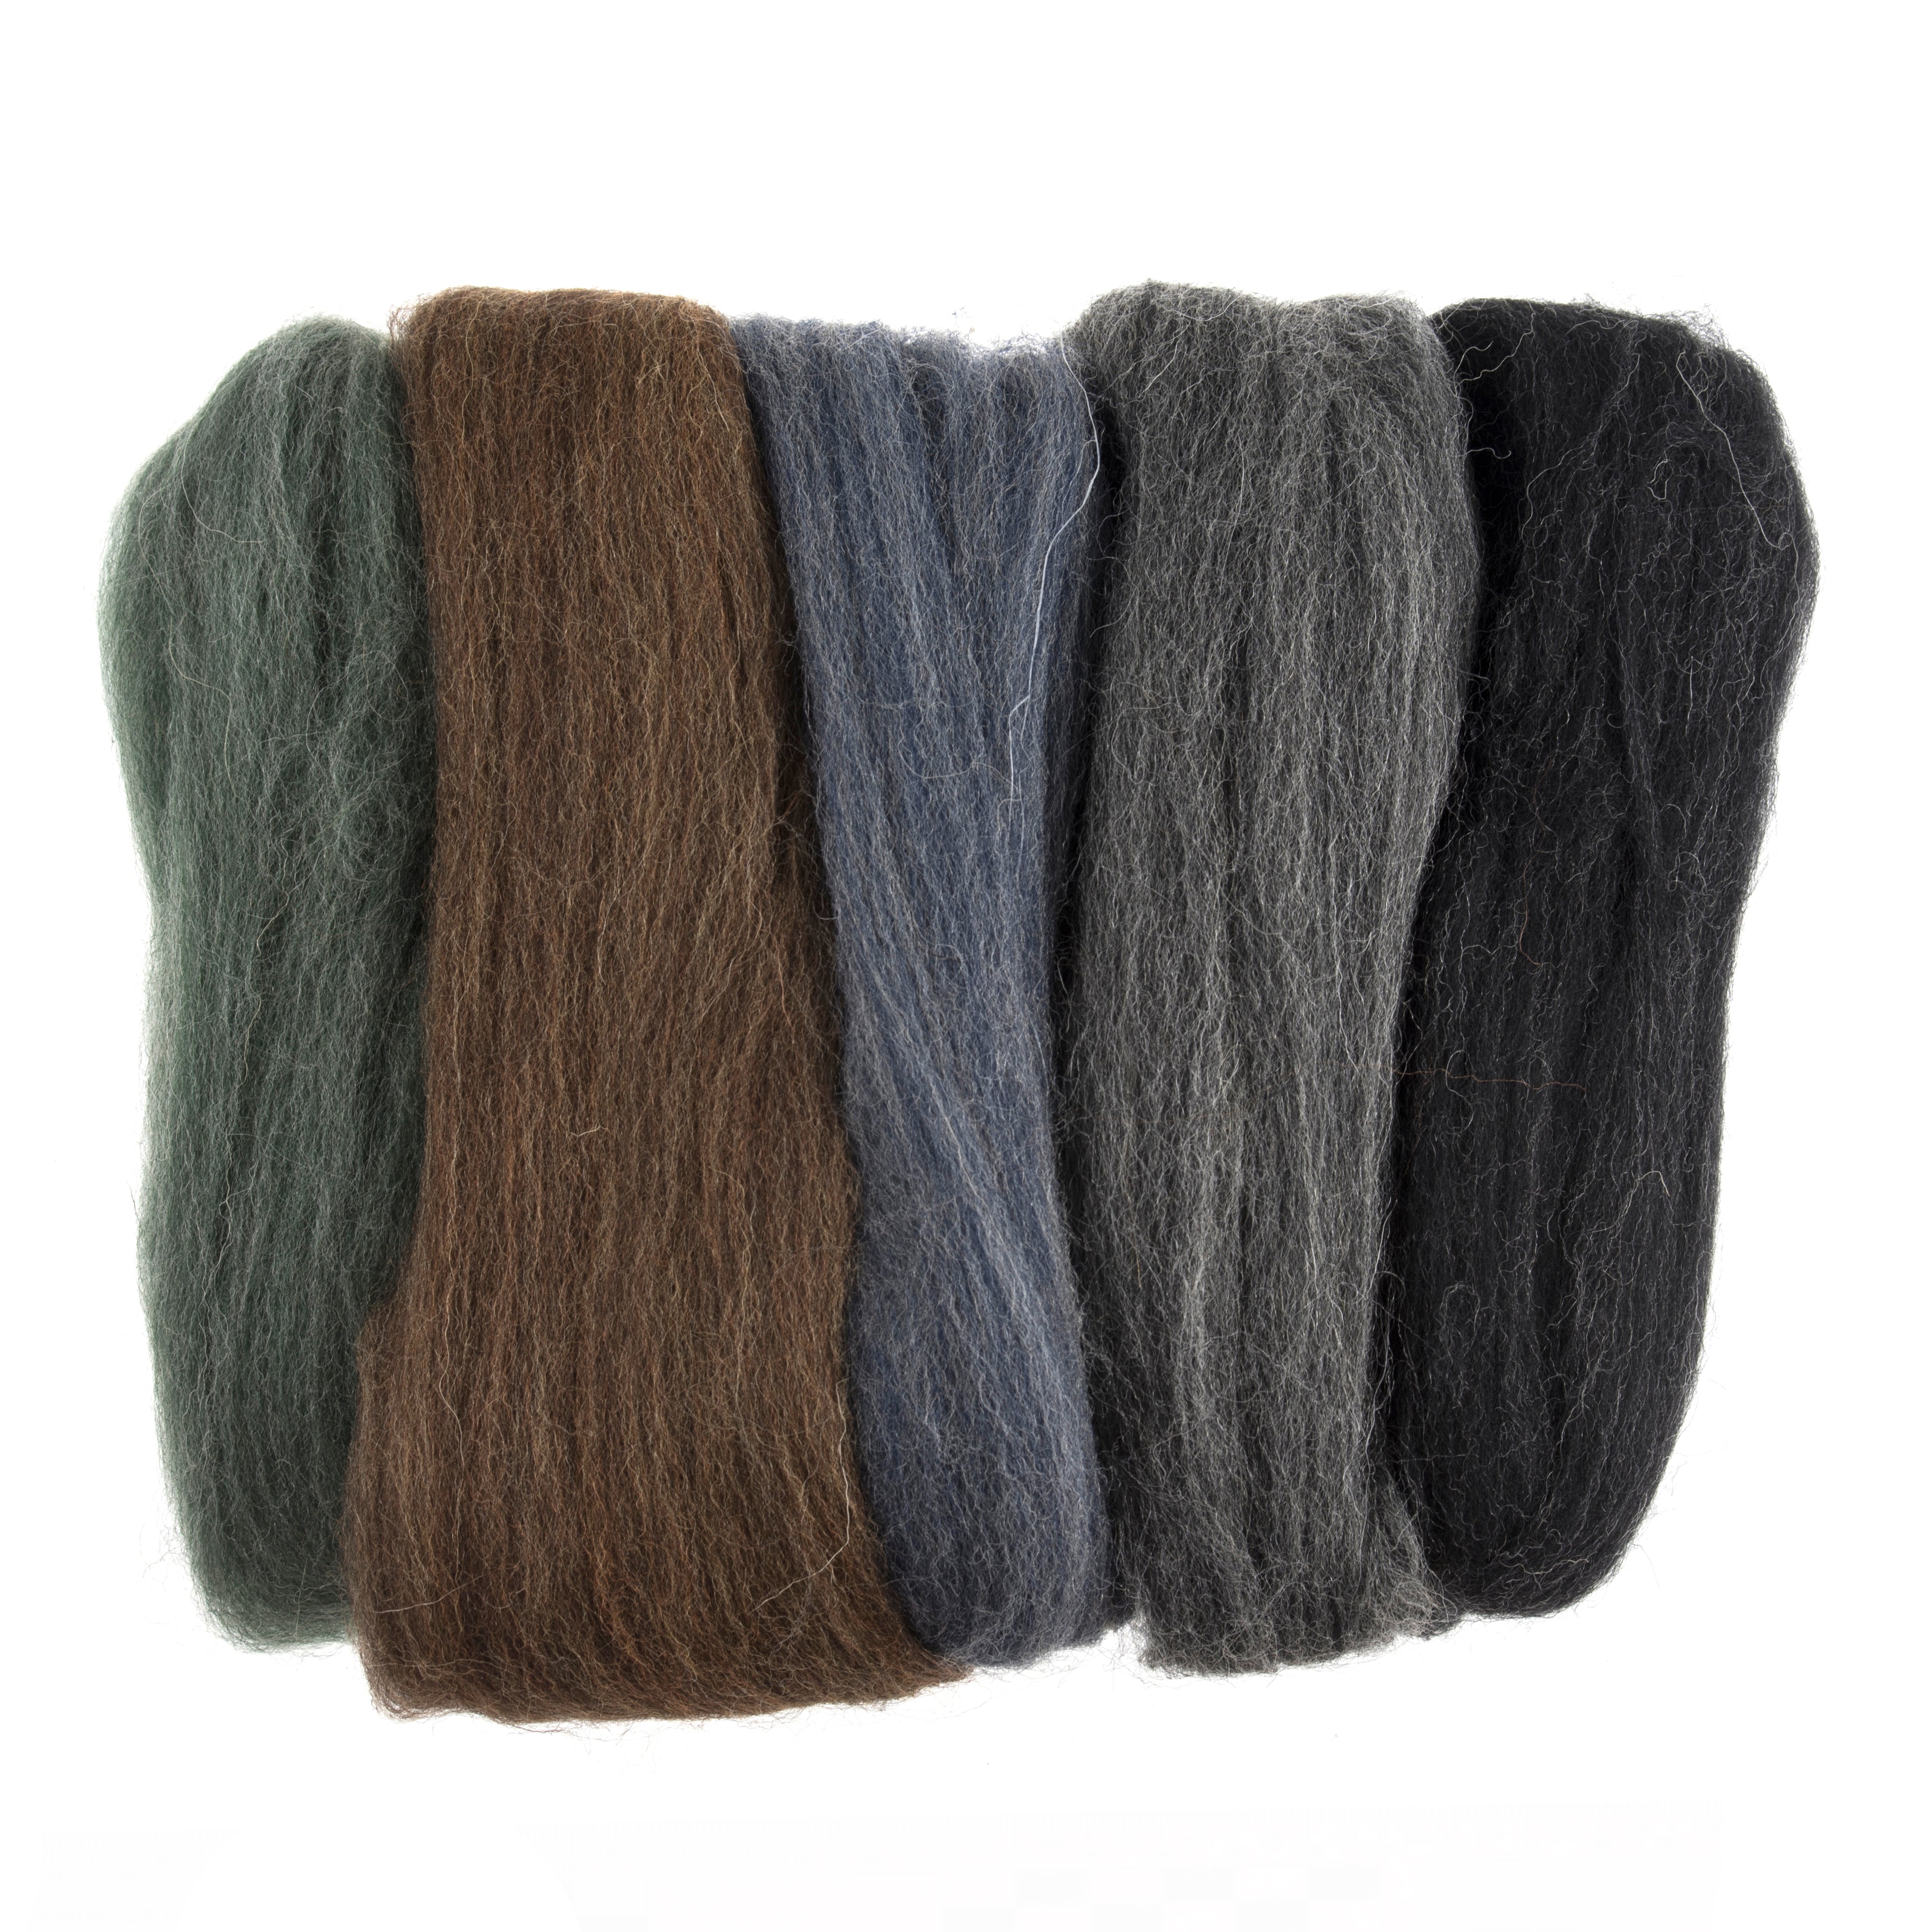 Natural Wool Roving: 50g: Assorted Melange